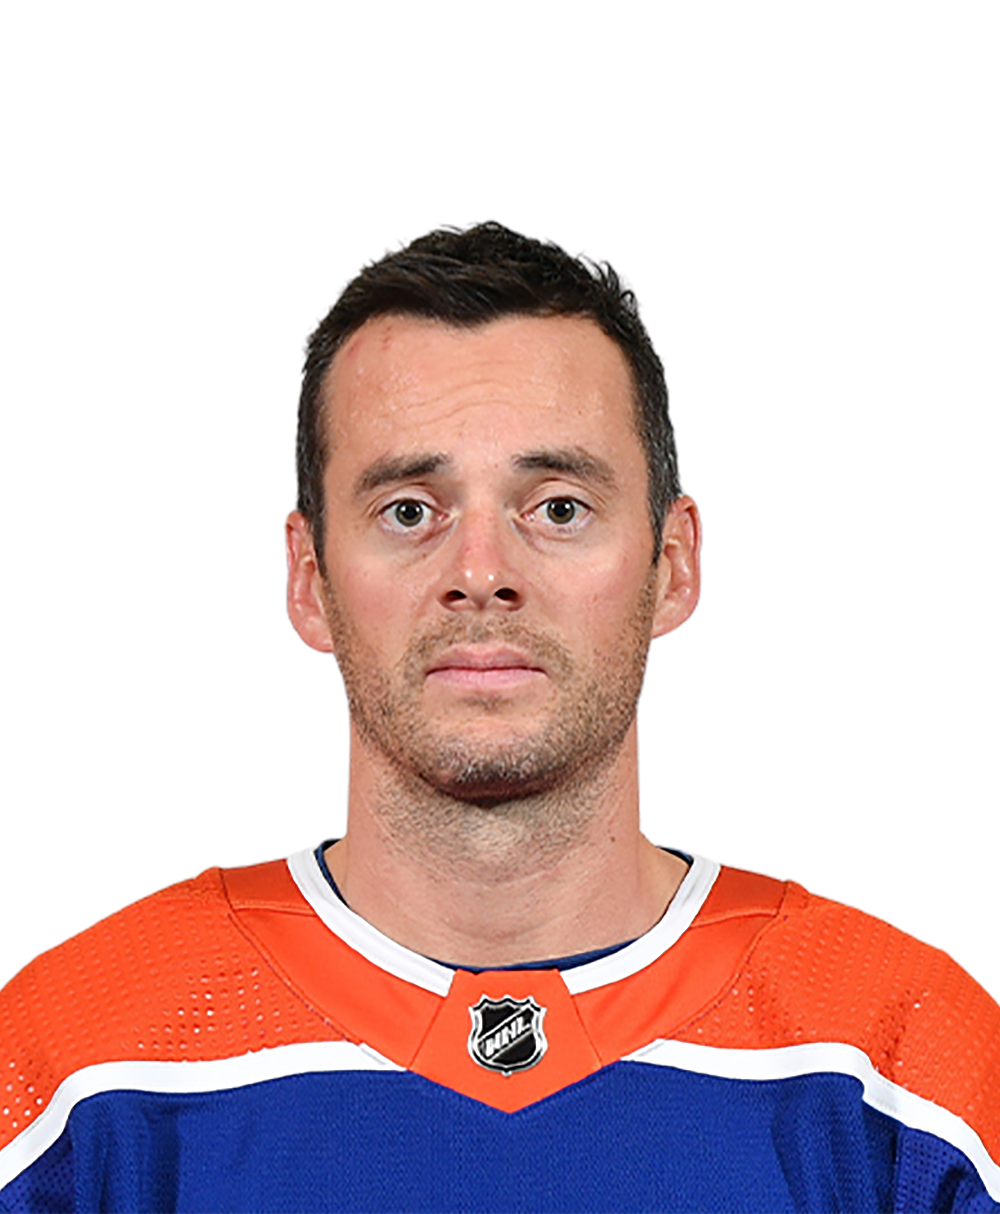 Derek Ryan (ice hockey) - Wikipedia